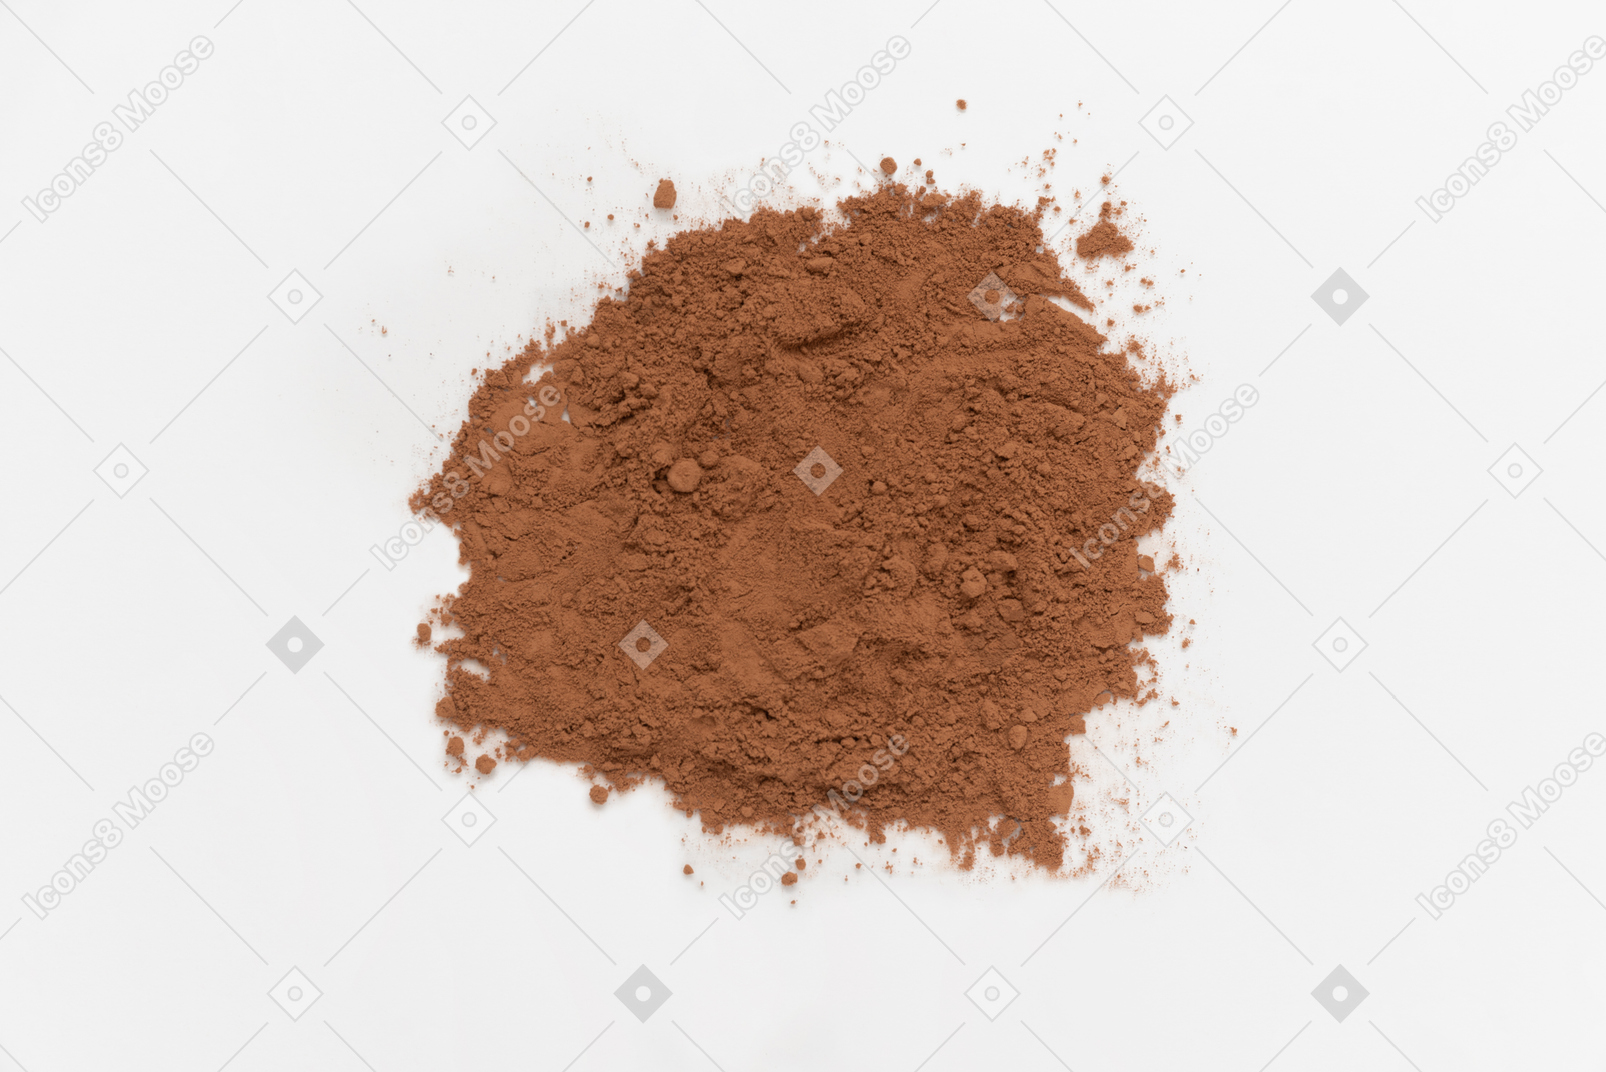 Cacao powder on white background